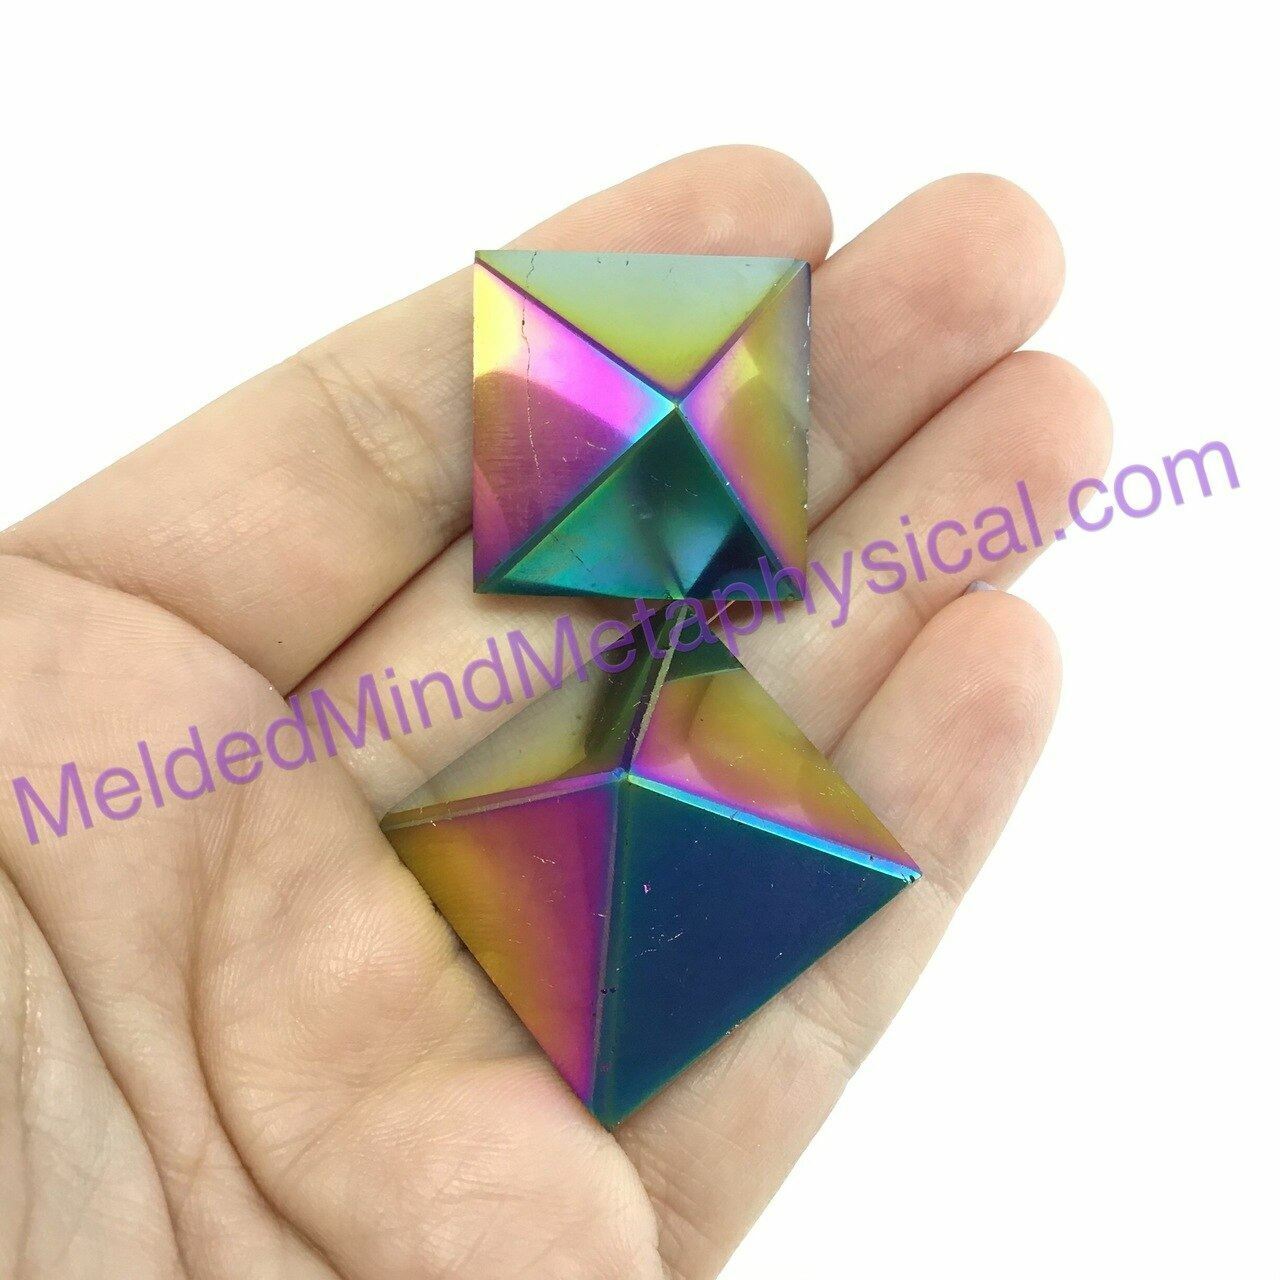 MeldedMind264 One (1) Titanium Aura Pyramid 18mm Decor Display Healing